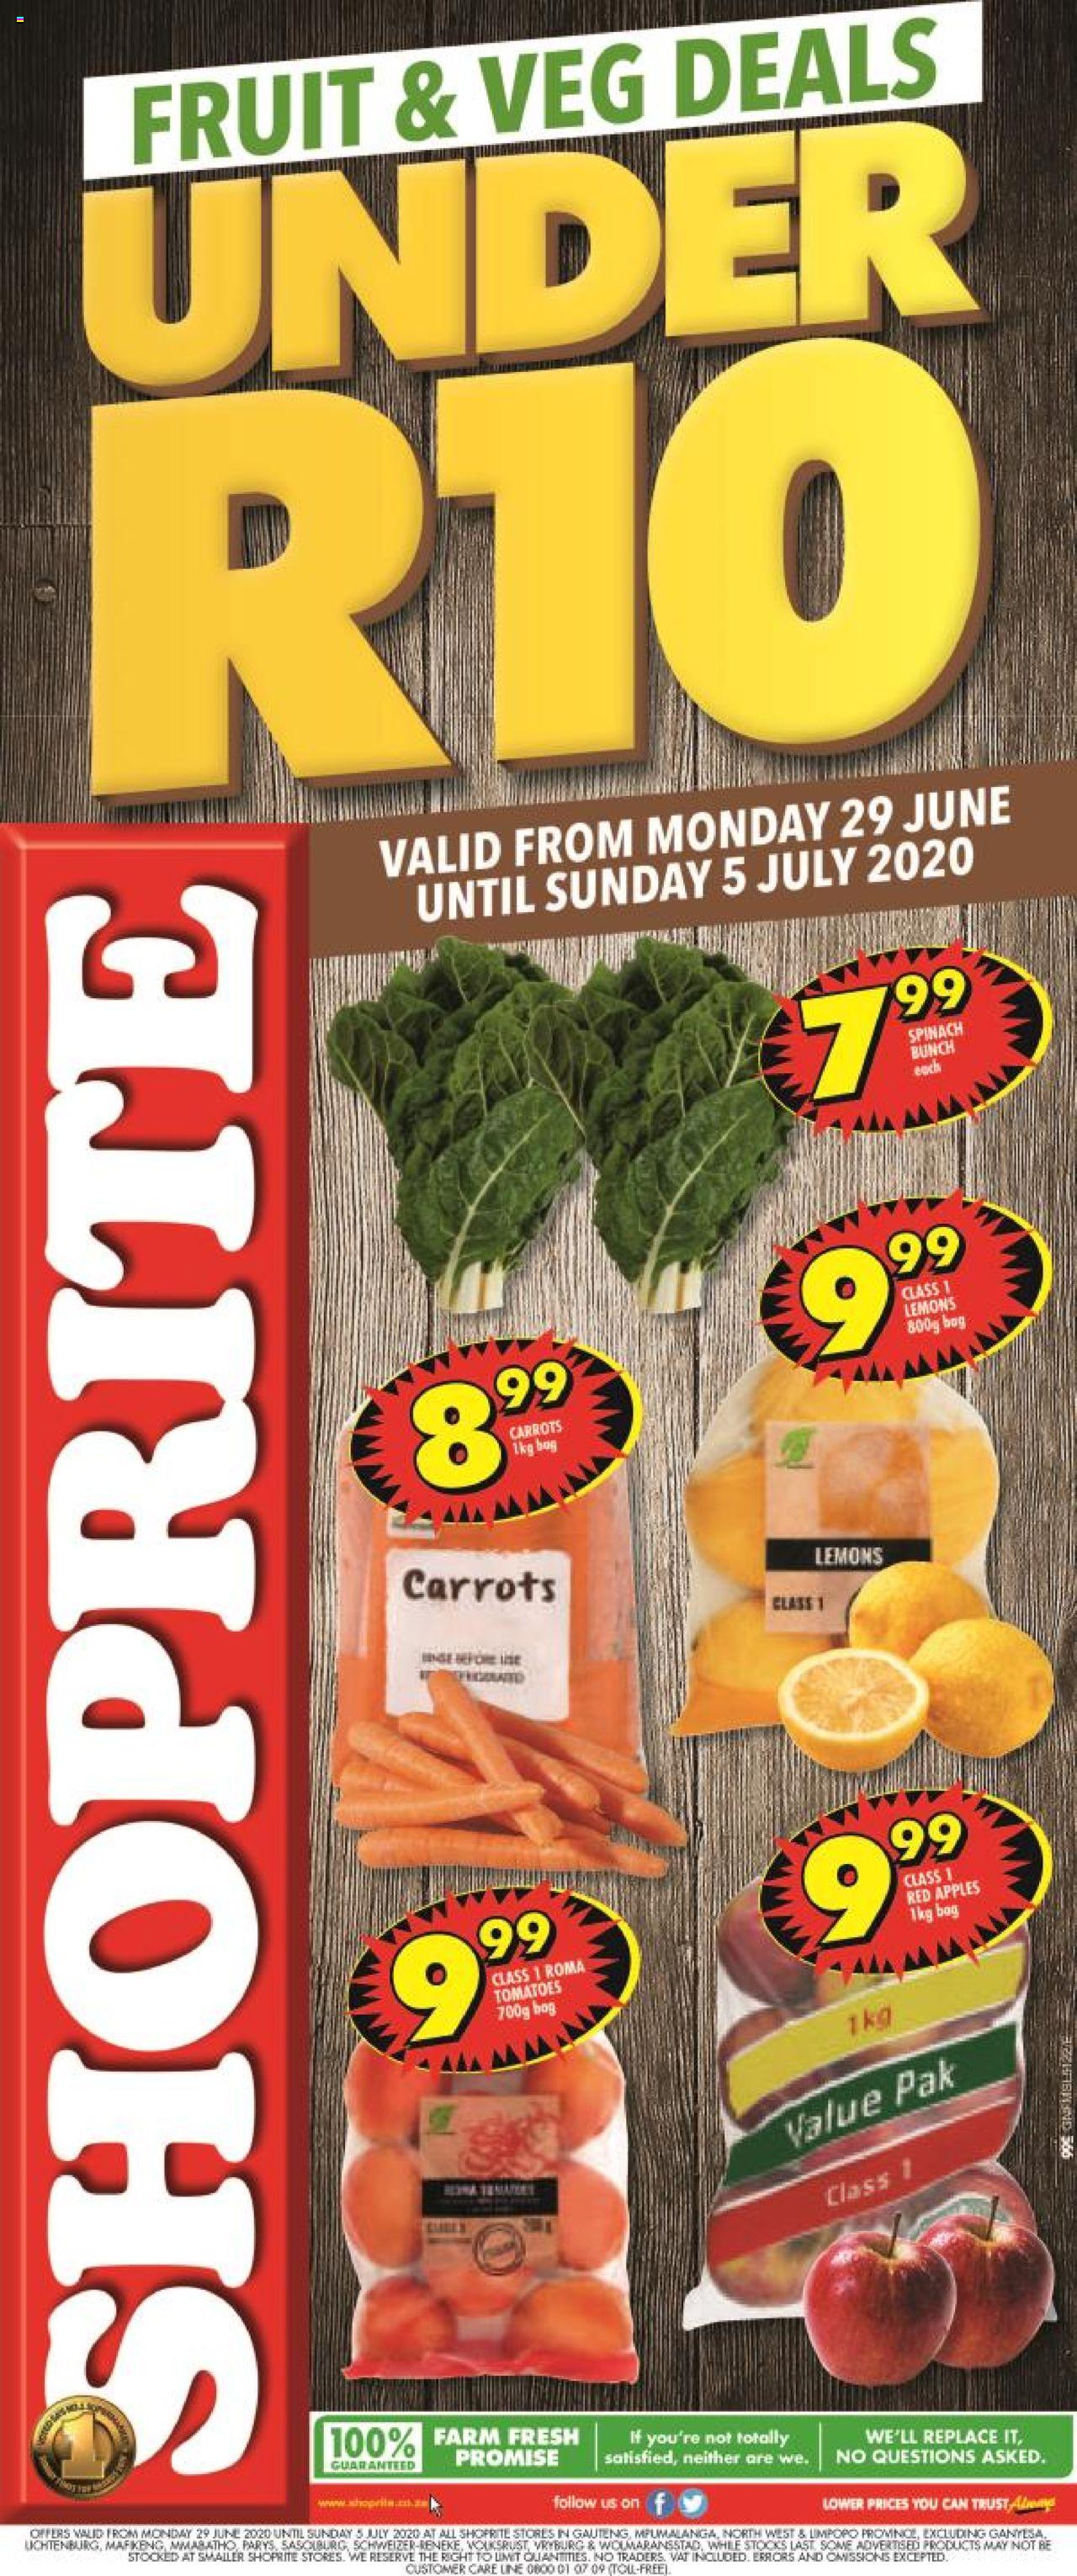 Shoprite Specials Fruit and Veg Deals 29 June 2020